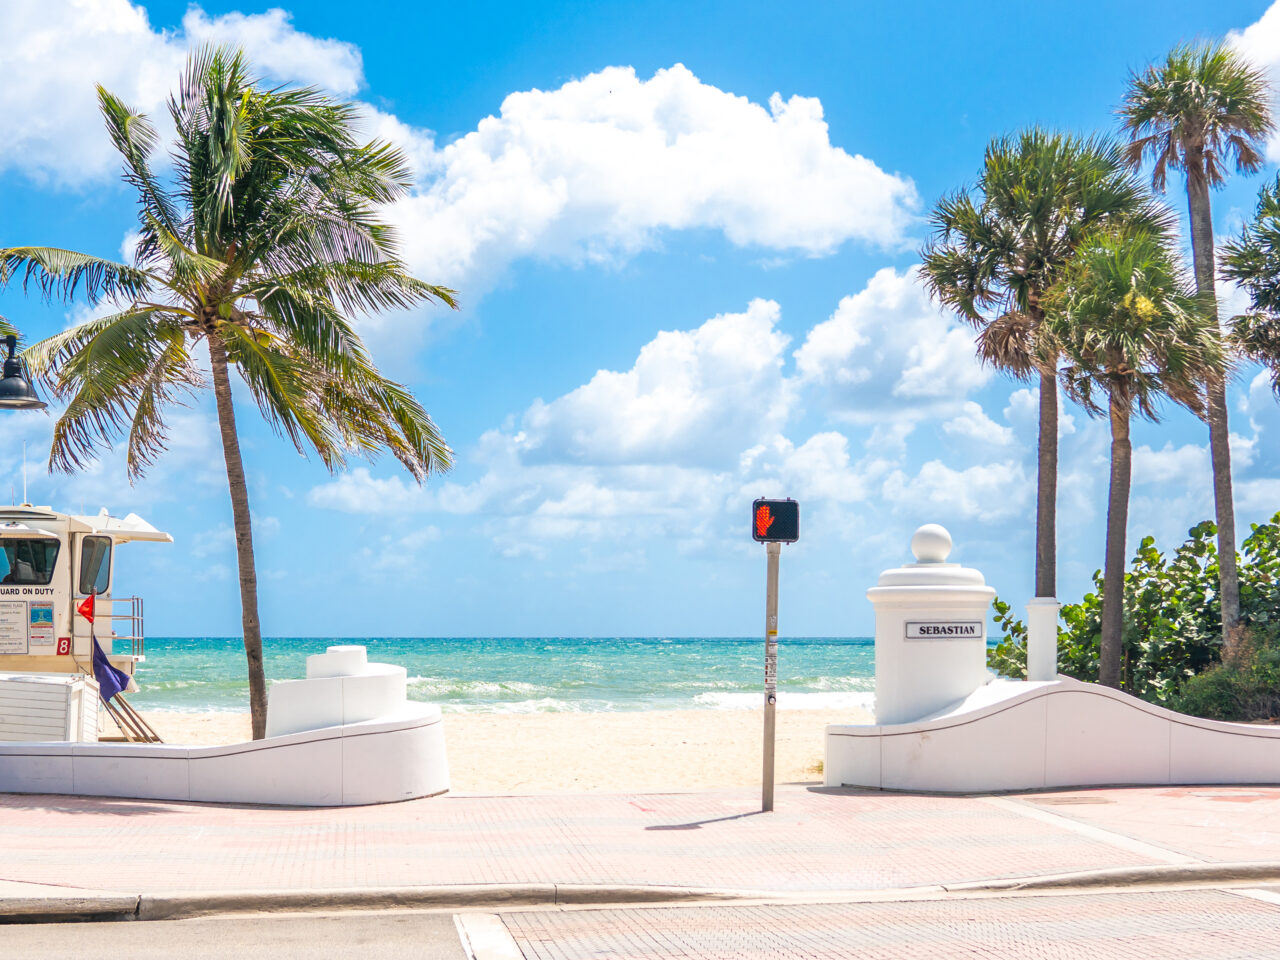 Planning a Florida Beach Vacation 